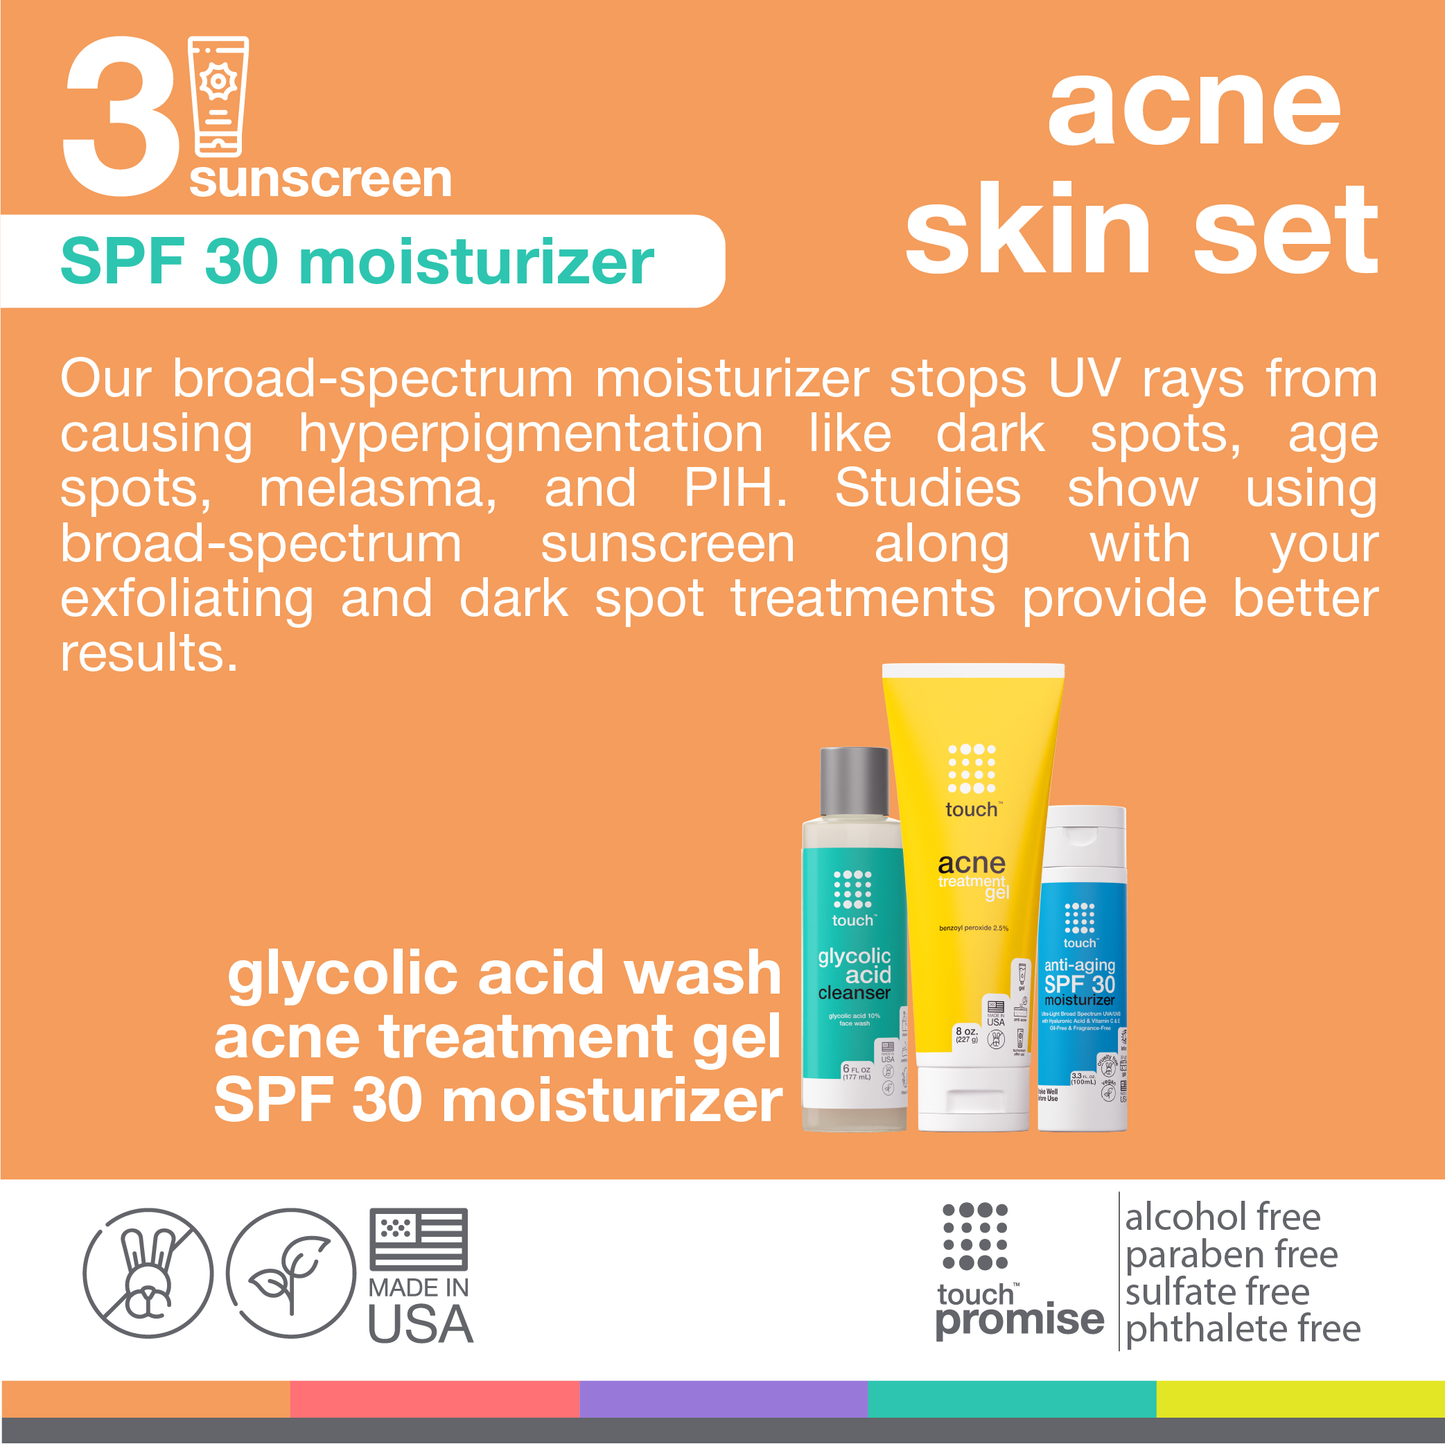 Touch skin care acne bundle set